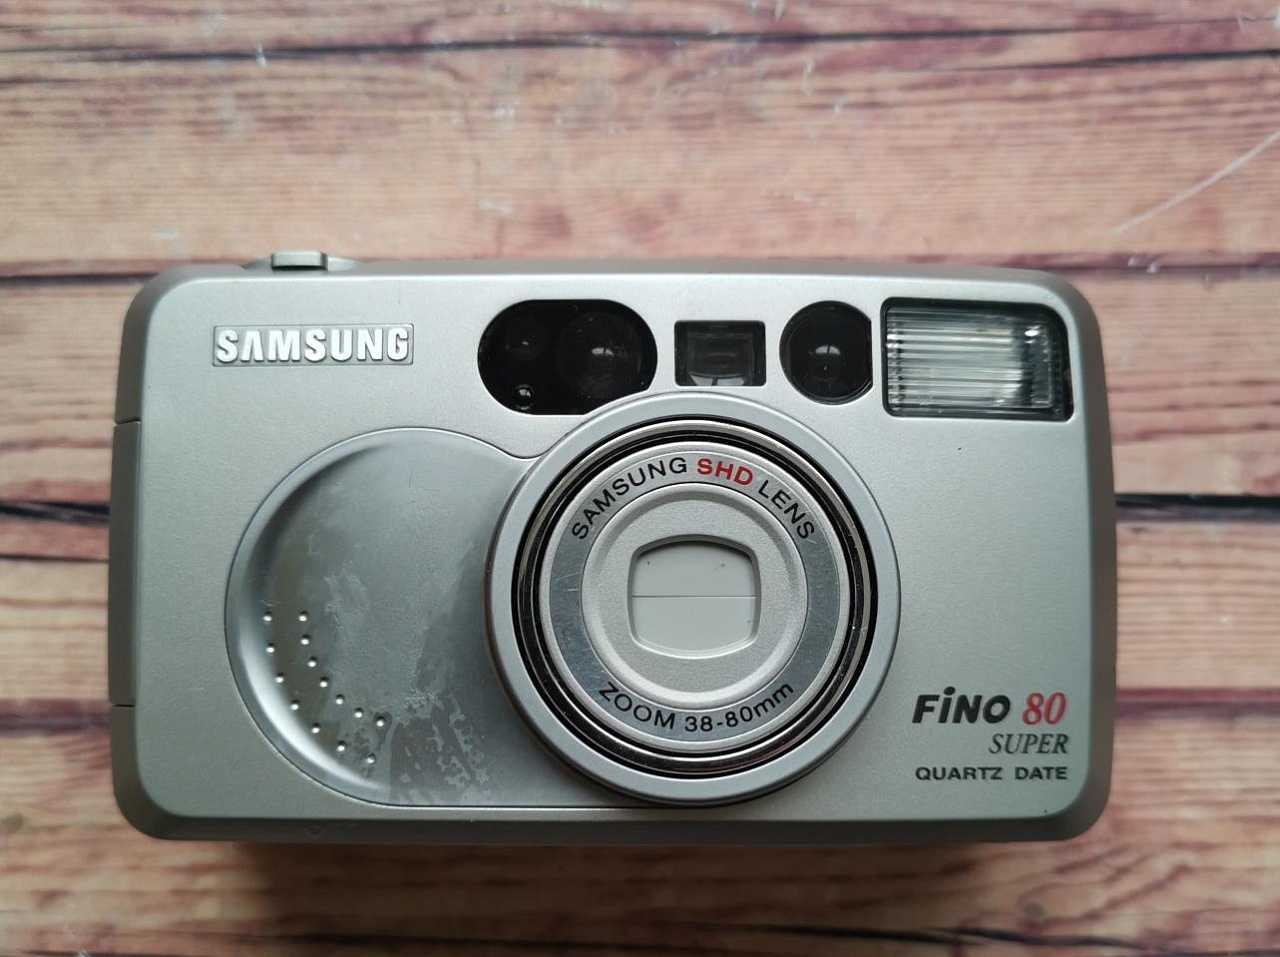 Samsung Fino 80 Super (уценка) фото №1